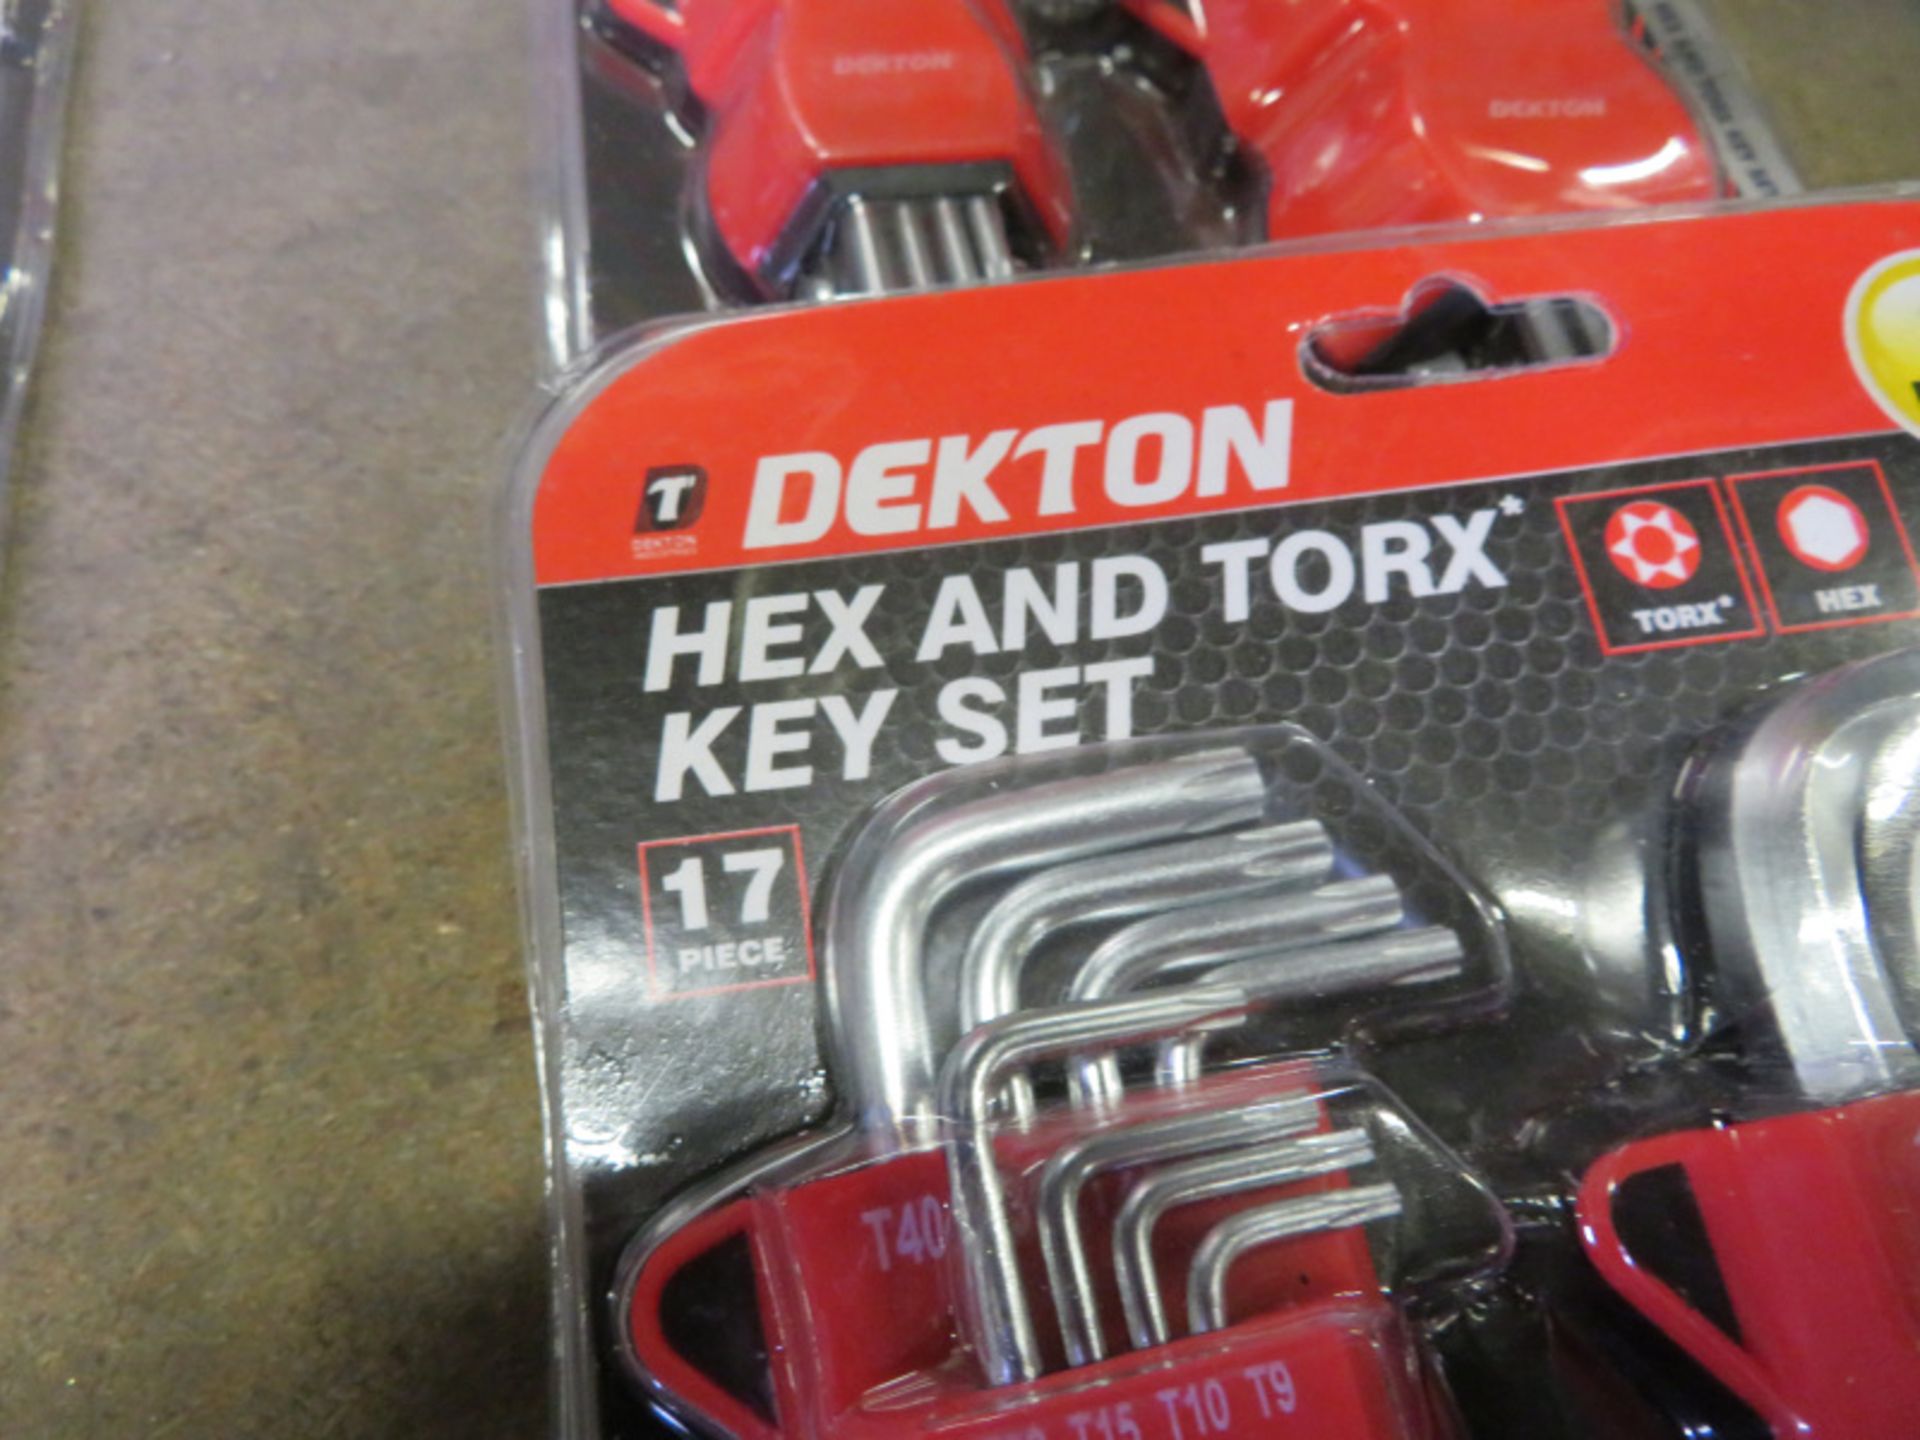 3x Dekton 17 piece Hex and Torx Key Sets - Image 3 of 3